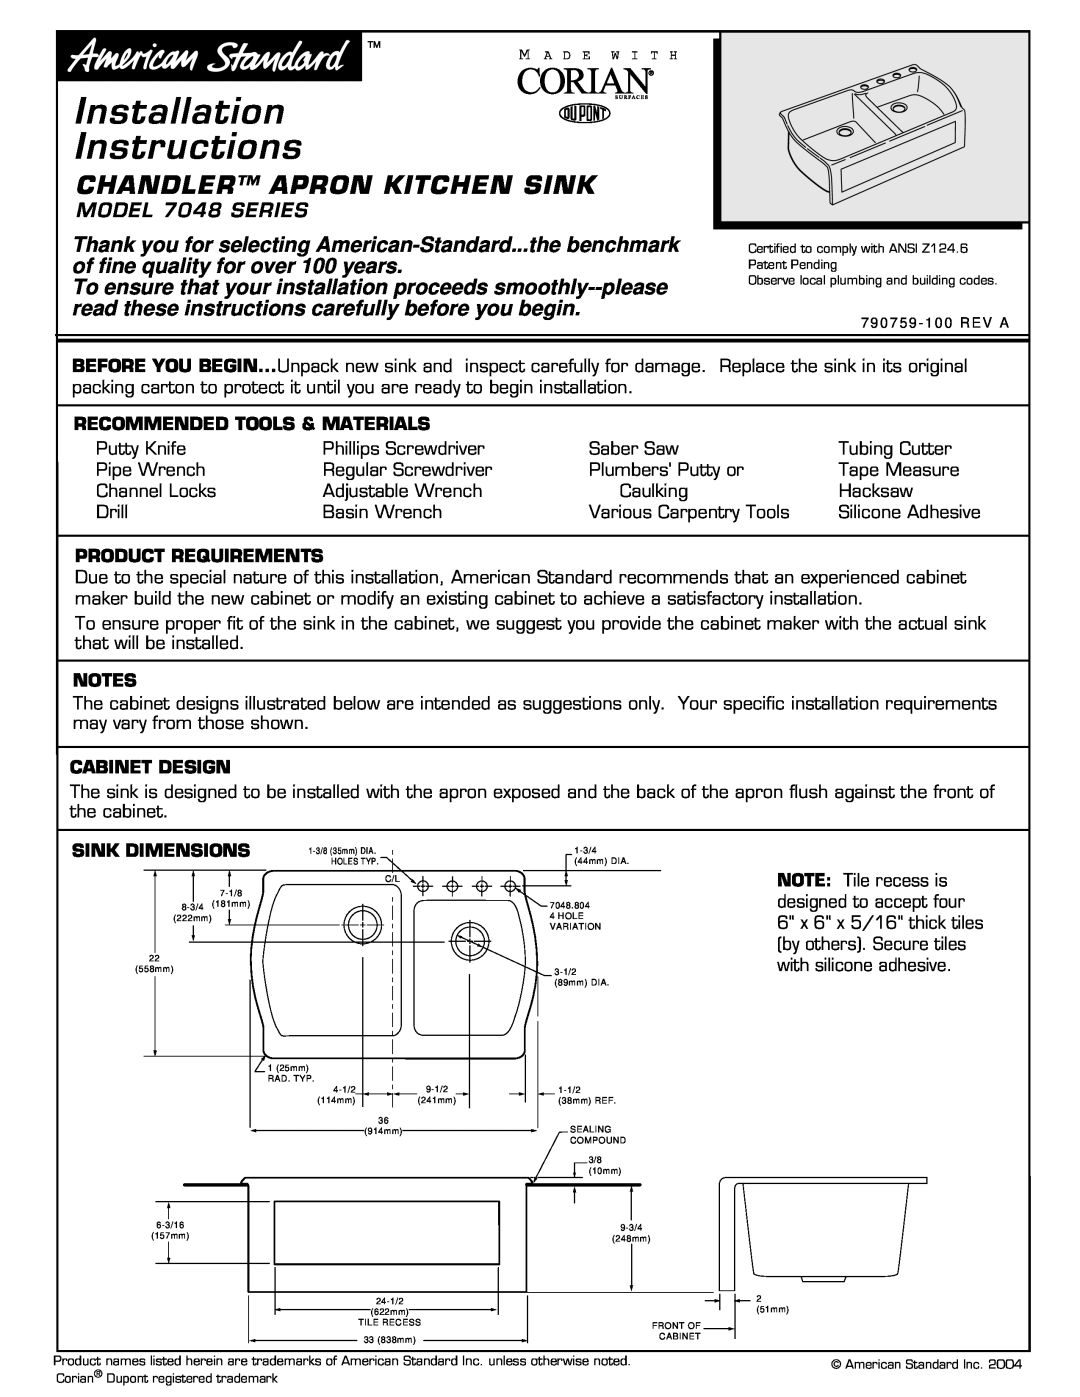 American Standard 7048 Series installation instructions Installation Instructions, Chandler Apron Kitchen Sink 